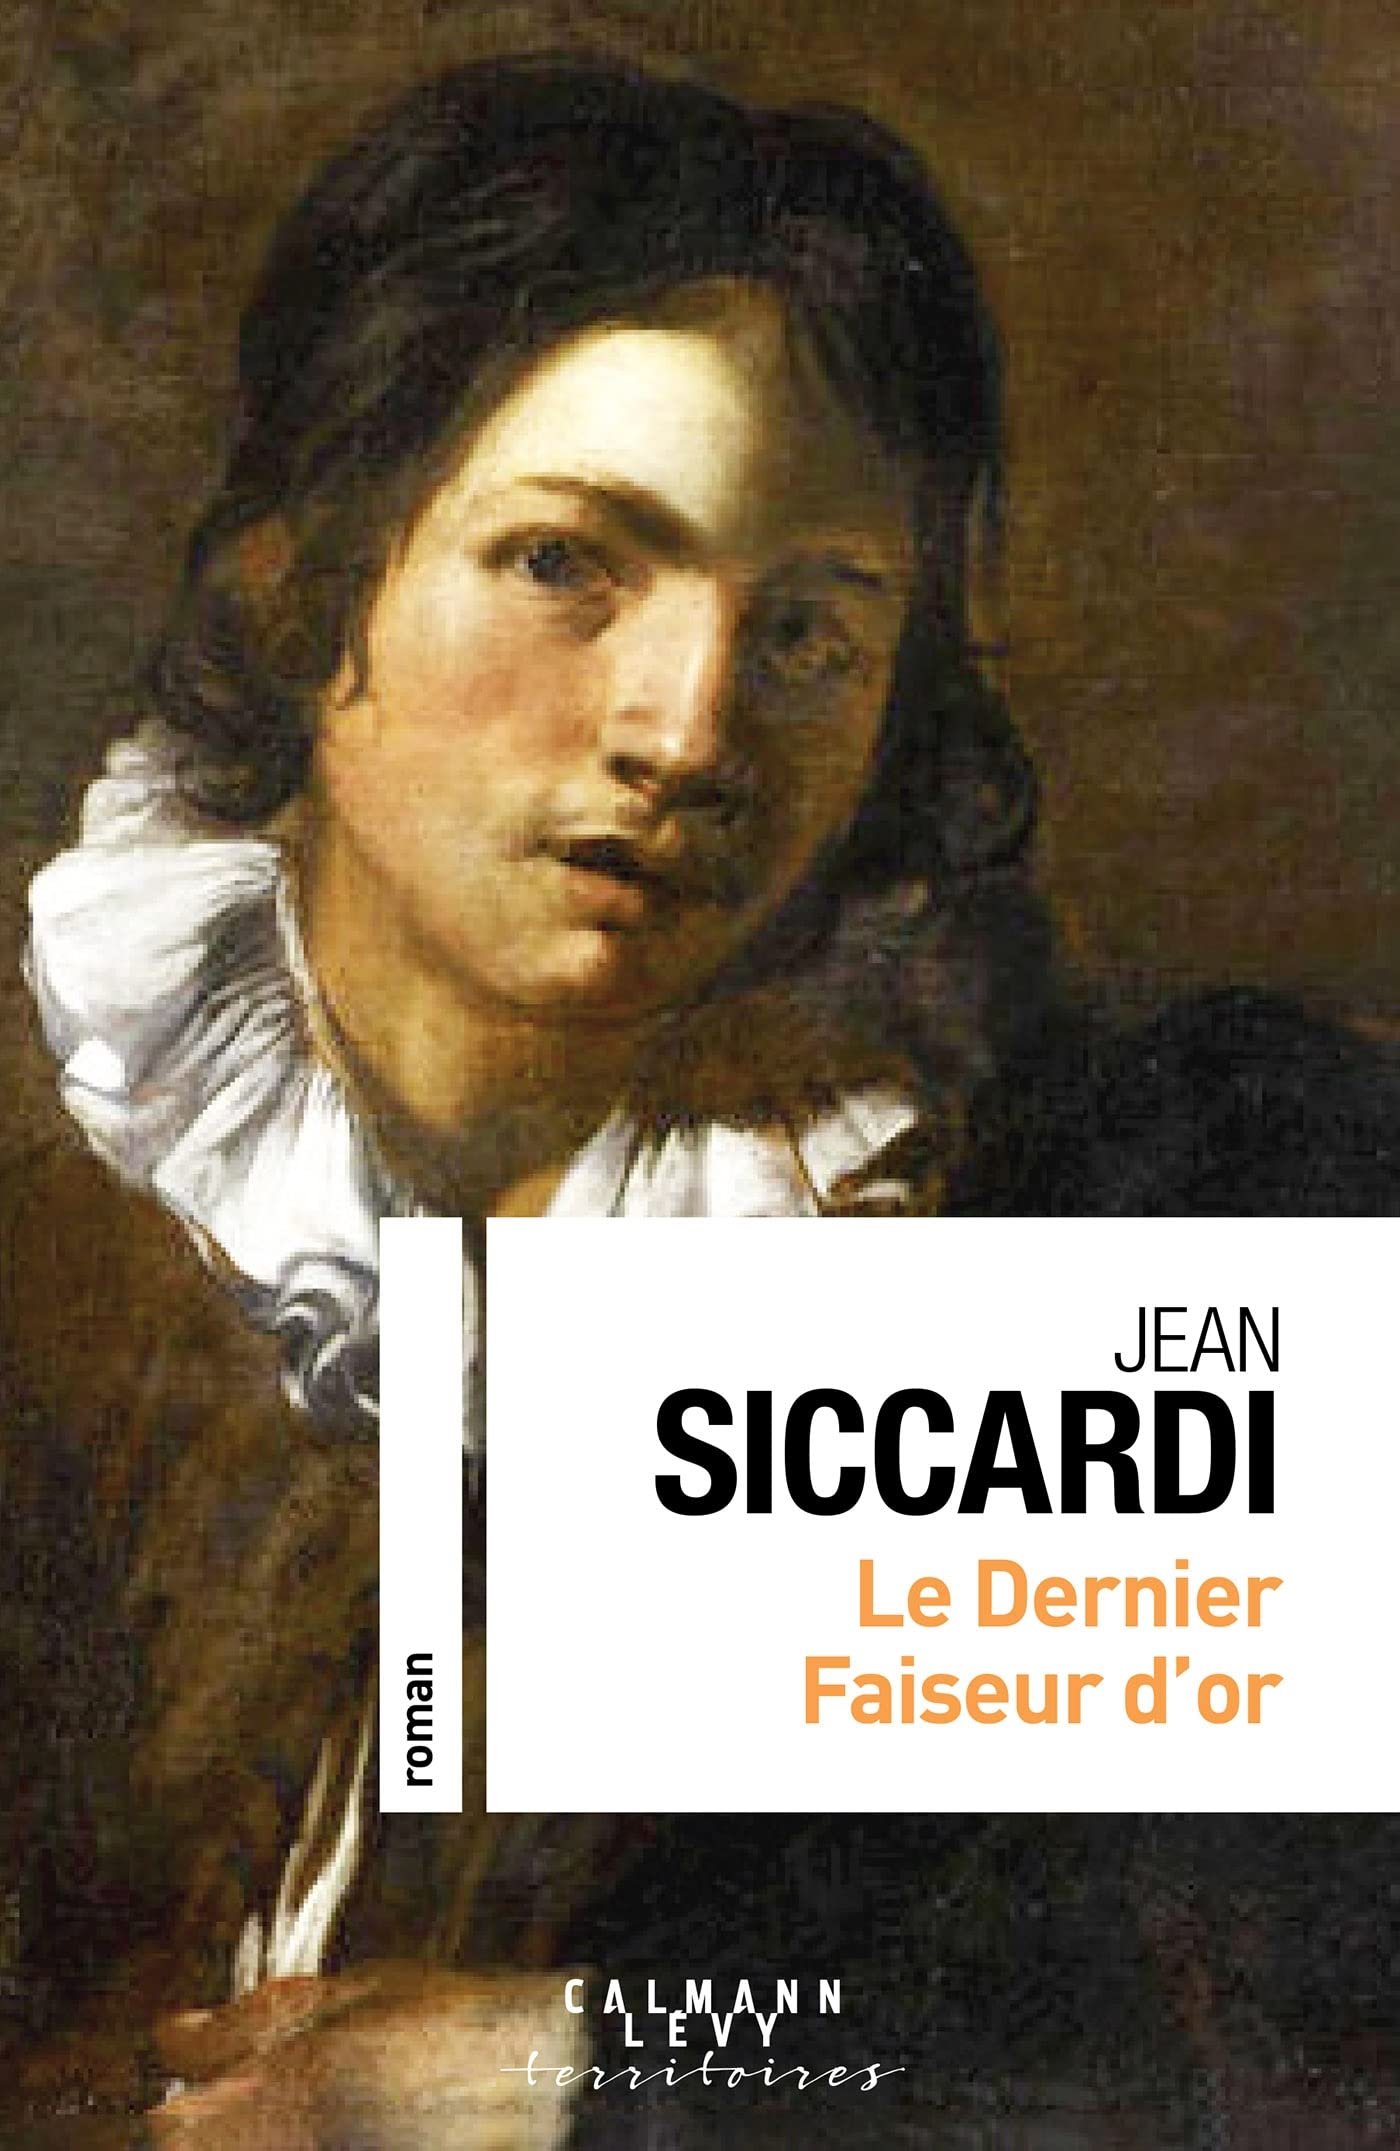 Jean Siccardi – Le dernier faiseur d'or